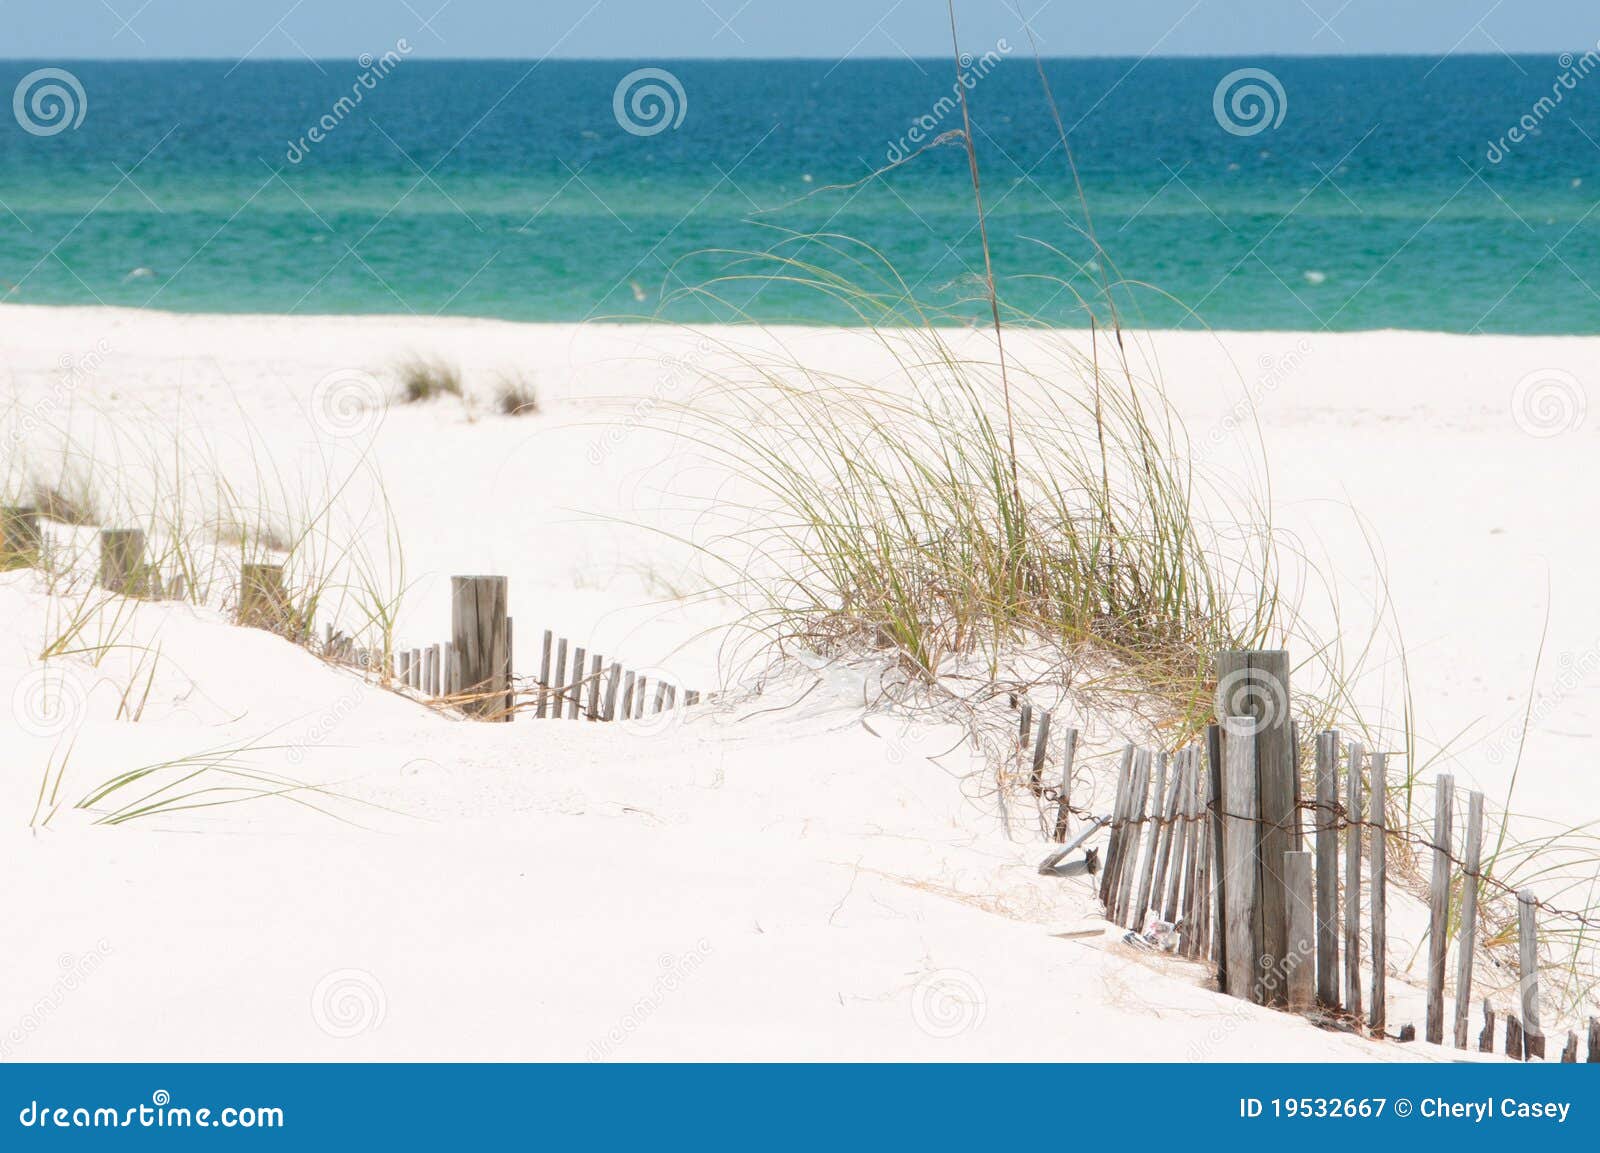 perdido key sand dune